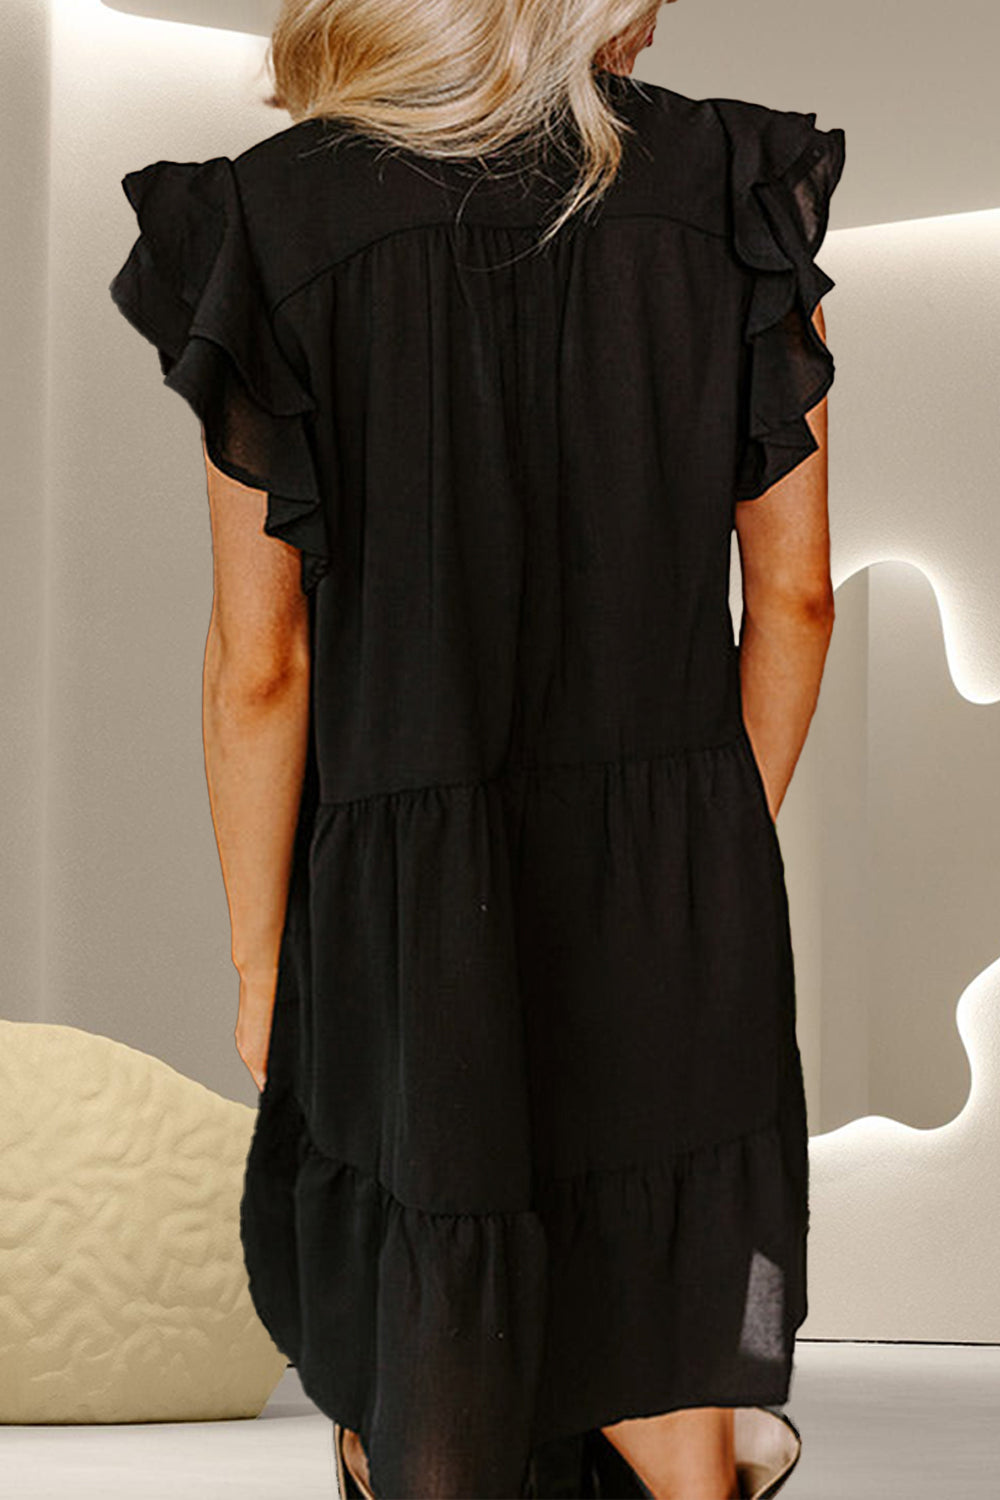 TEEK - Black Embroidered Ruffled Cap Sleeve Mini Dress DRESS TEEK Trend   